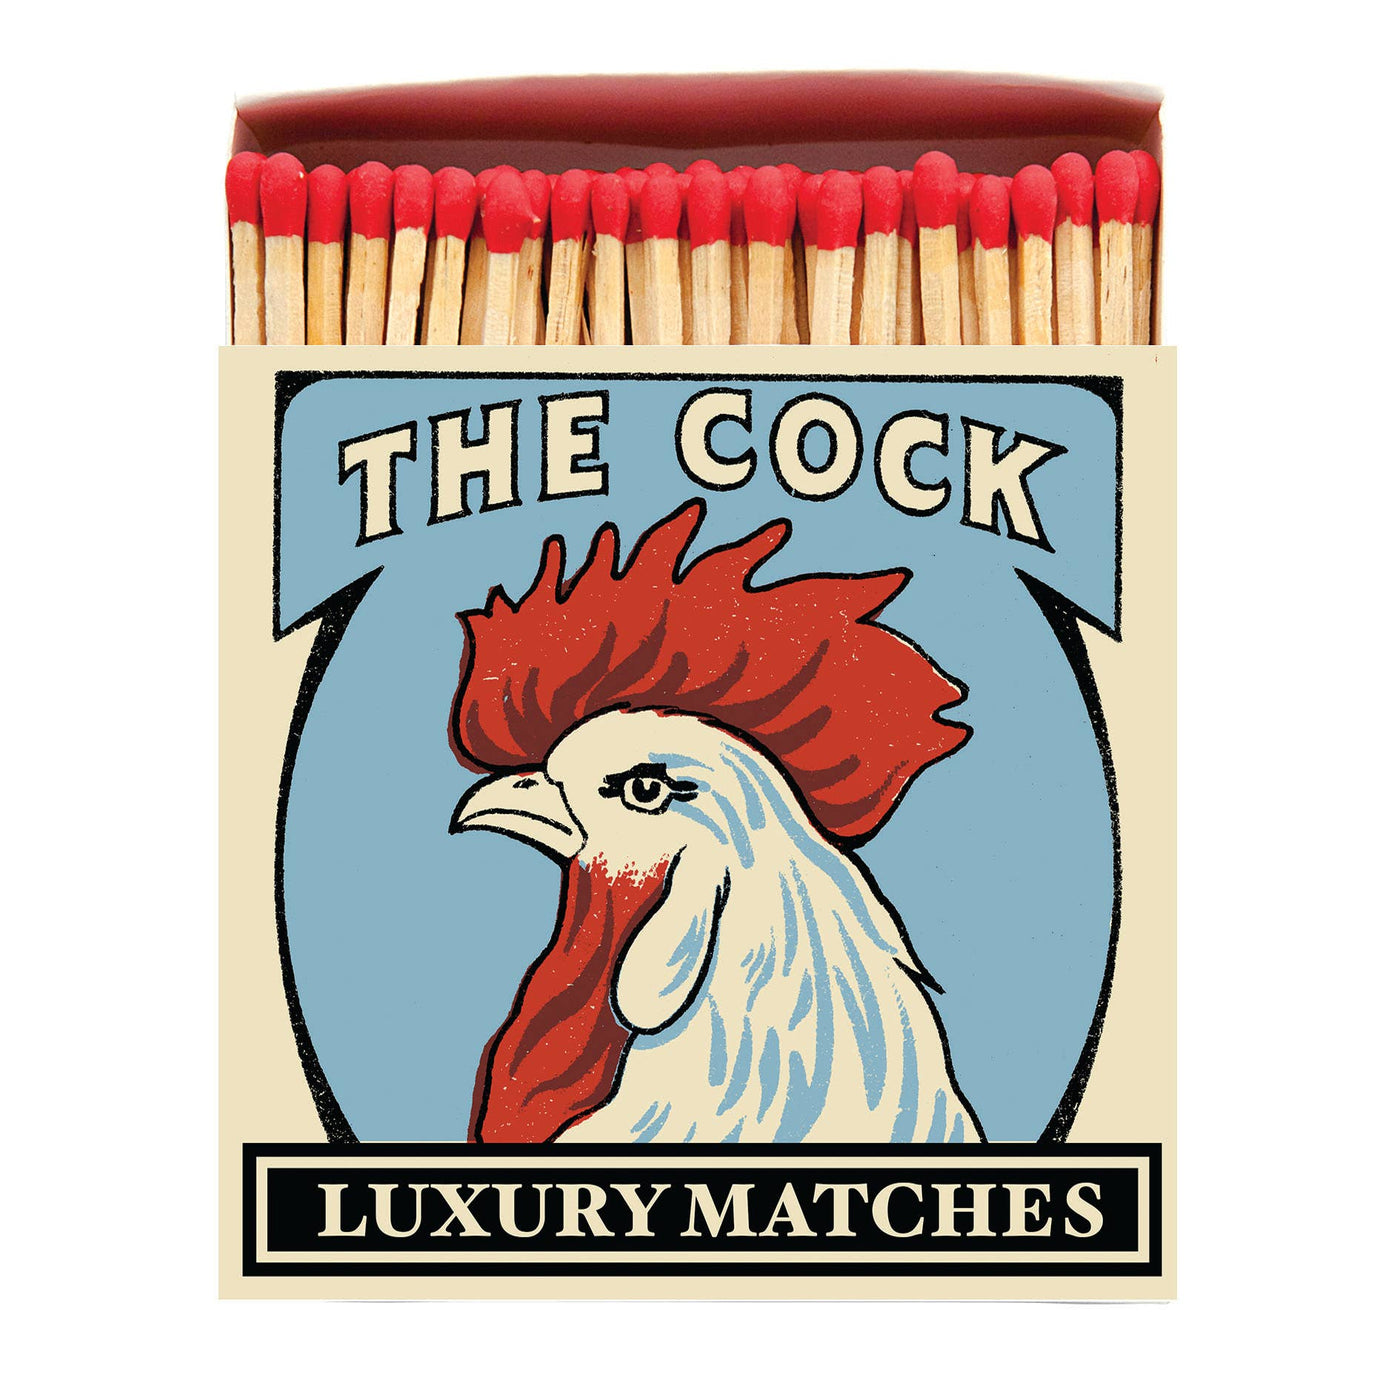 The Cock Matchbox